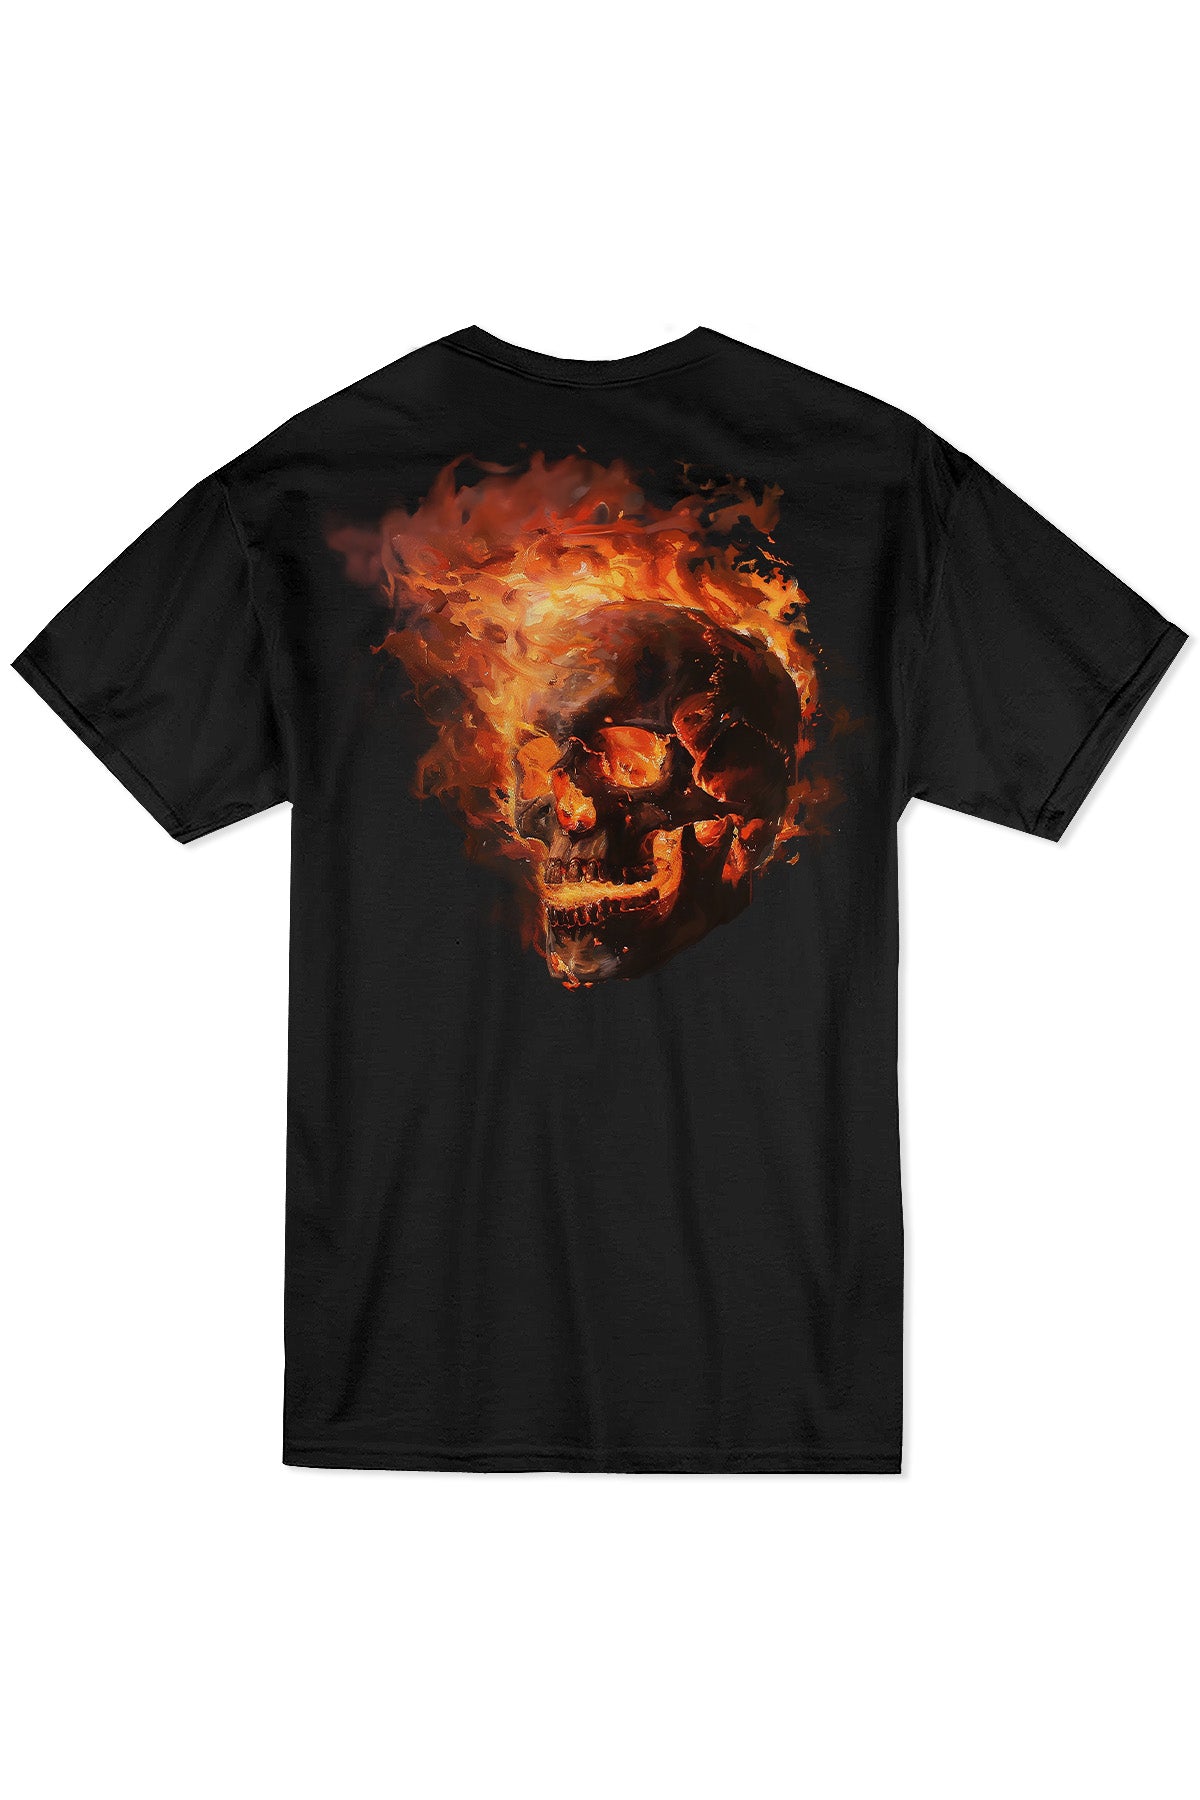 Enferno Burning Skull Tee in Black back.